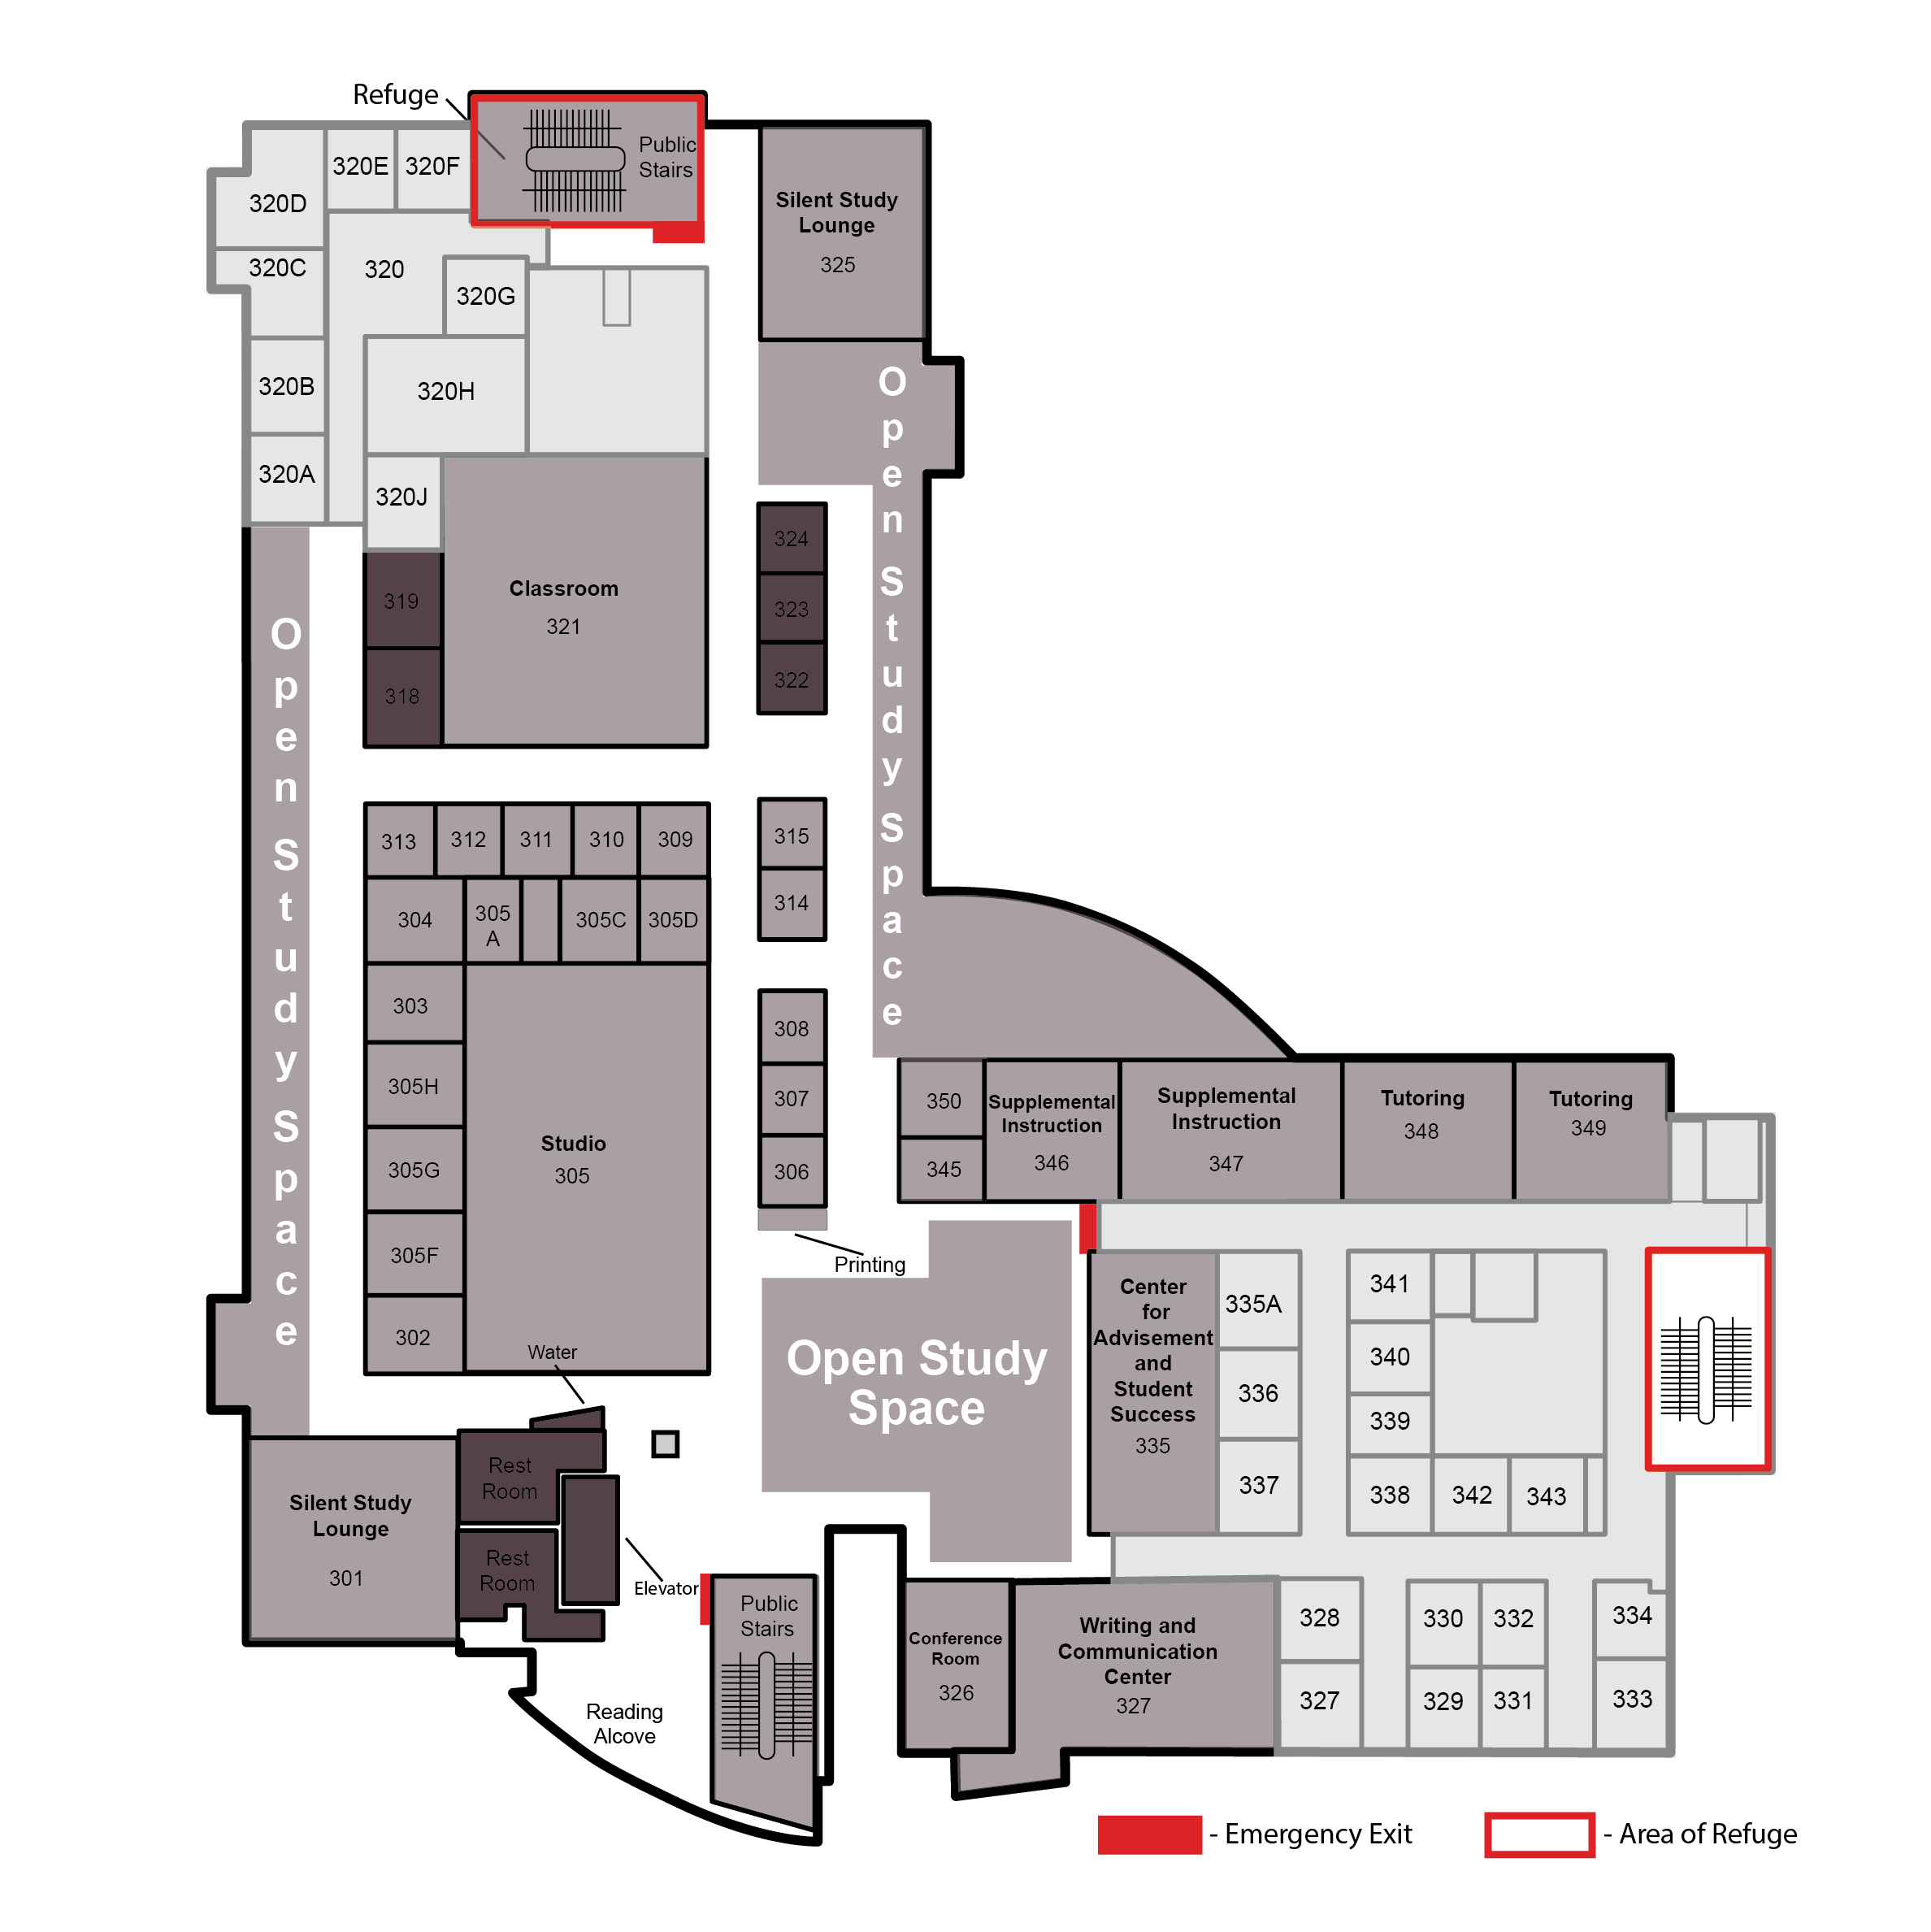 map of third floor of utc library